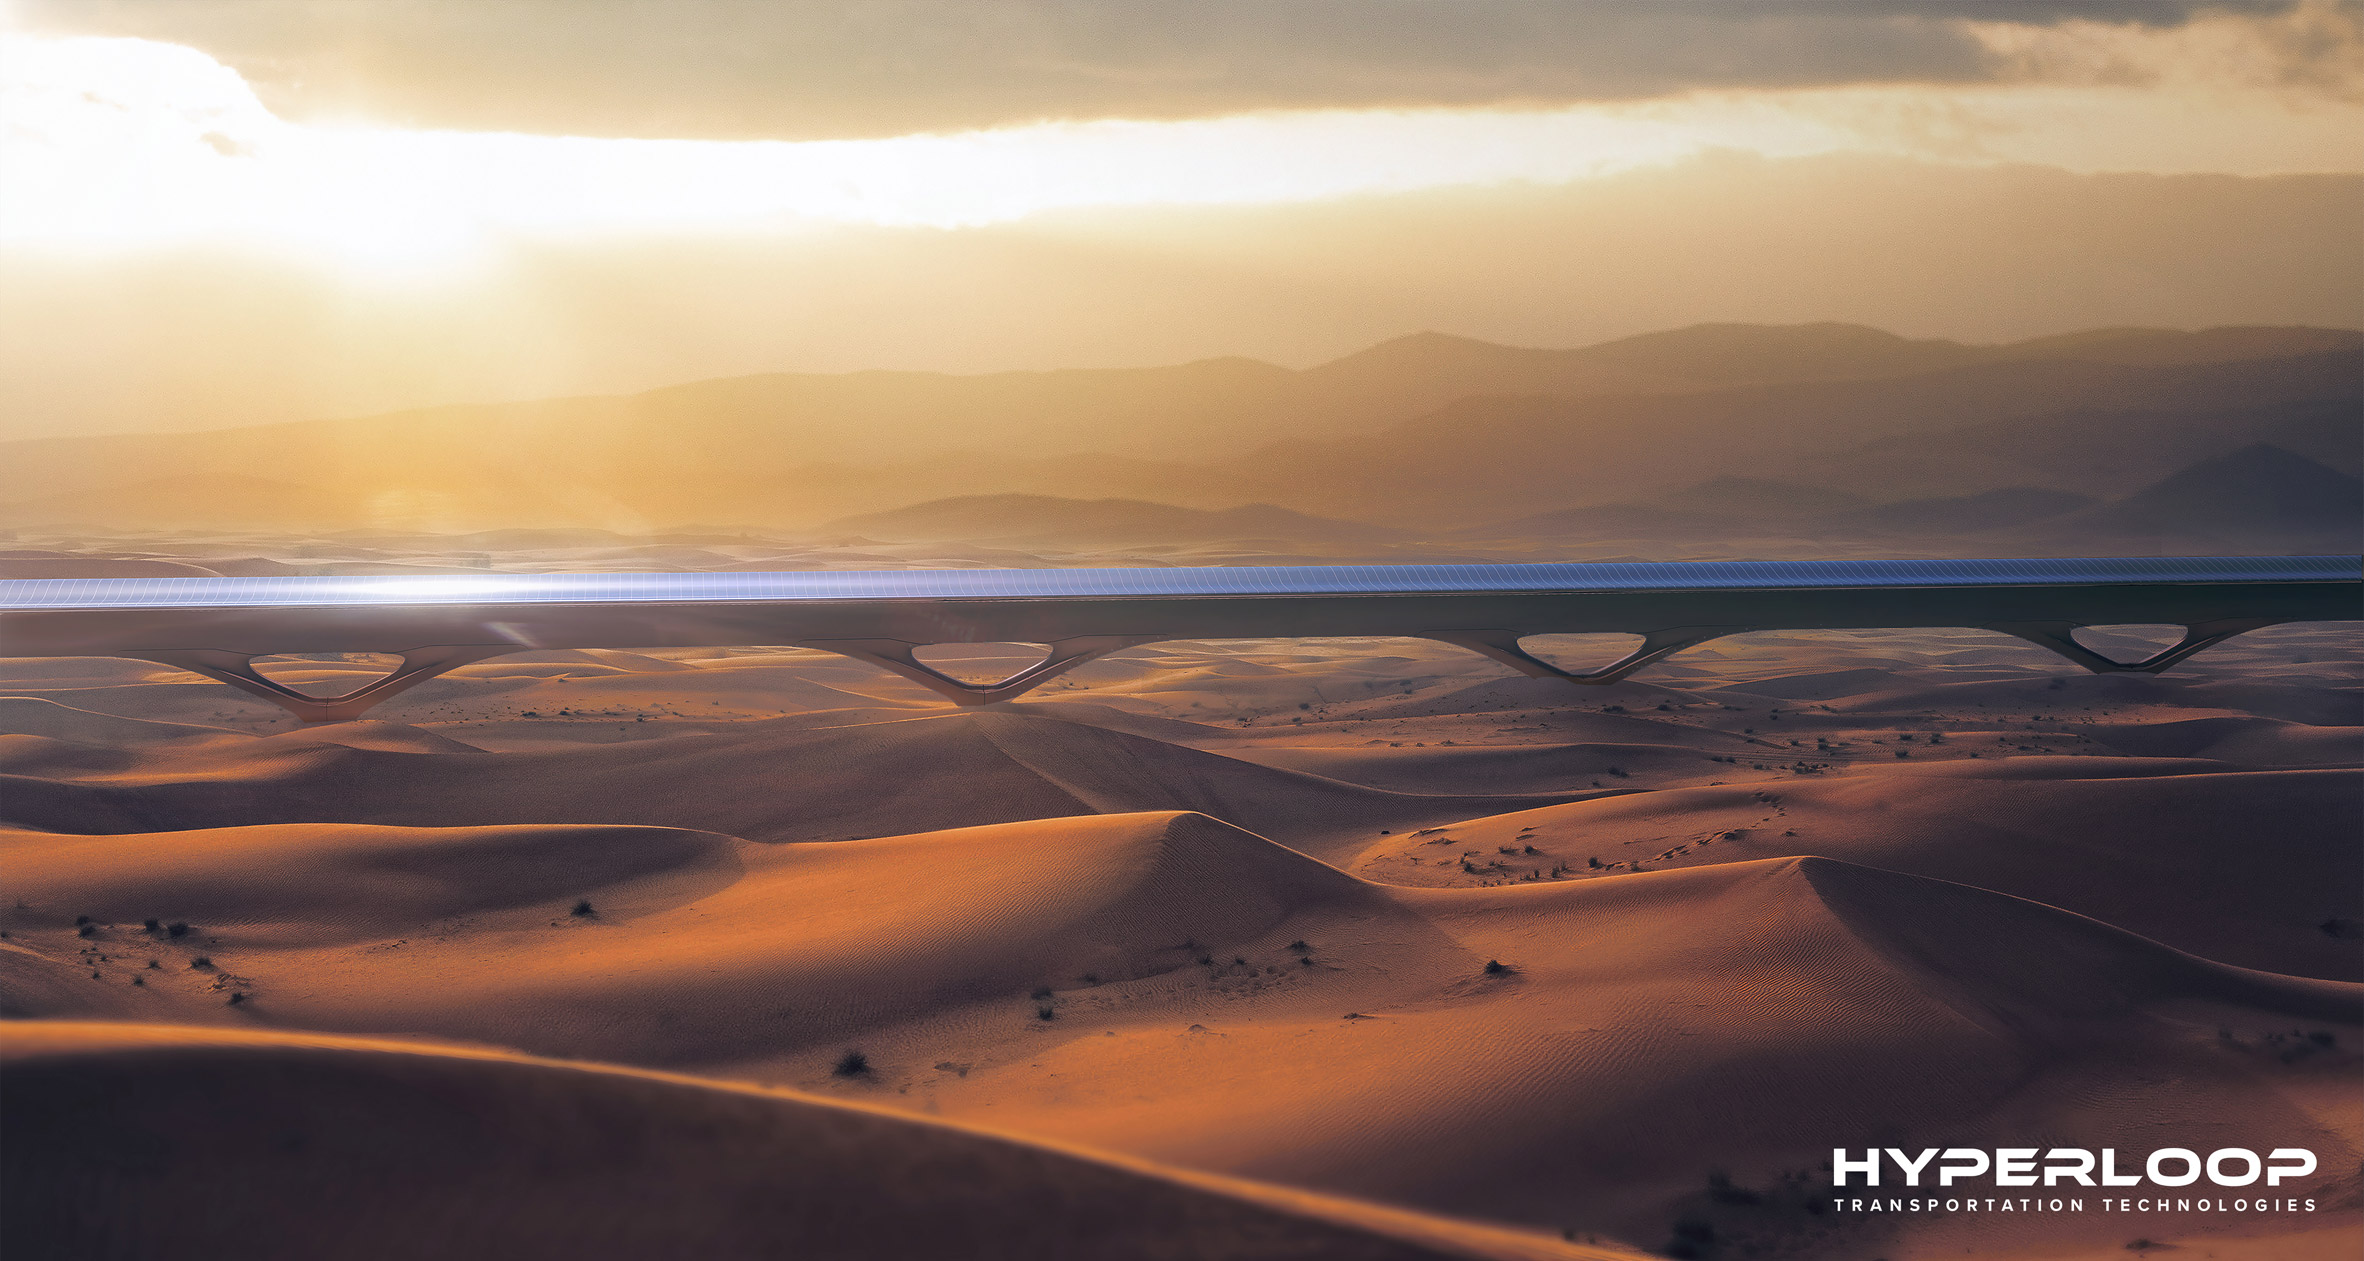 Architecture studio MAD designs solar-powered hyperloop